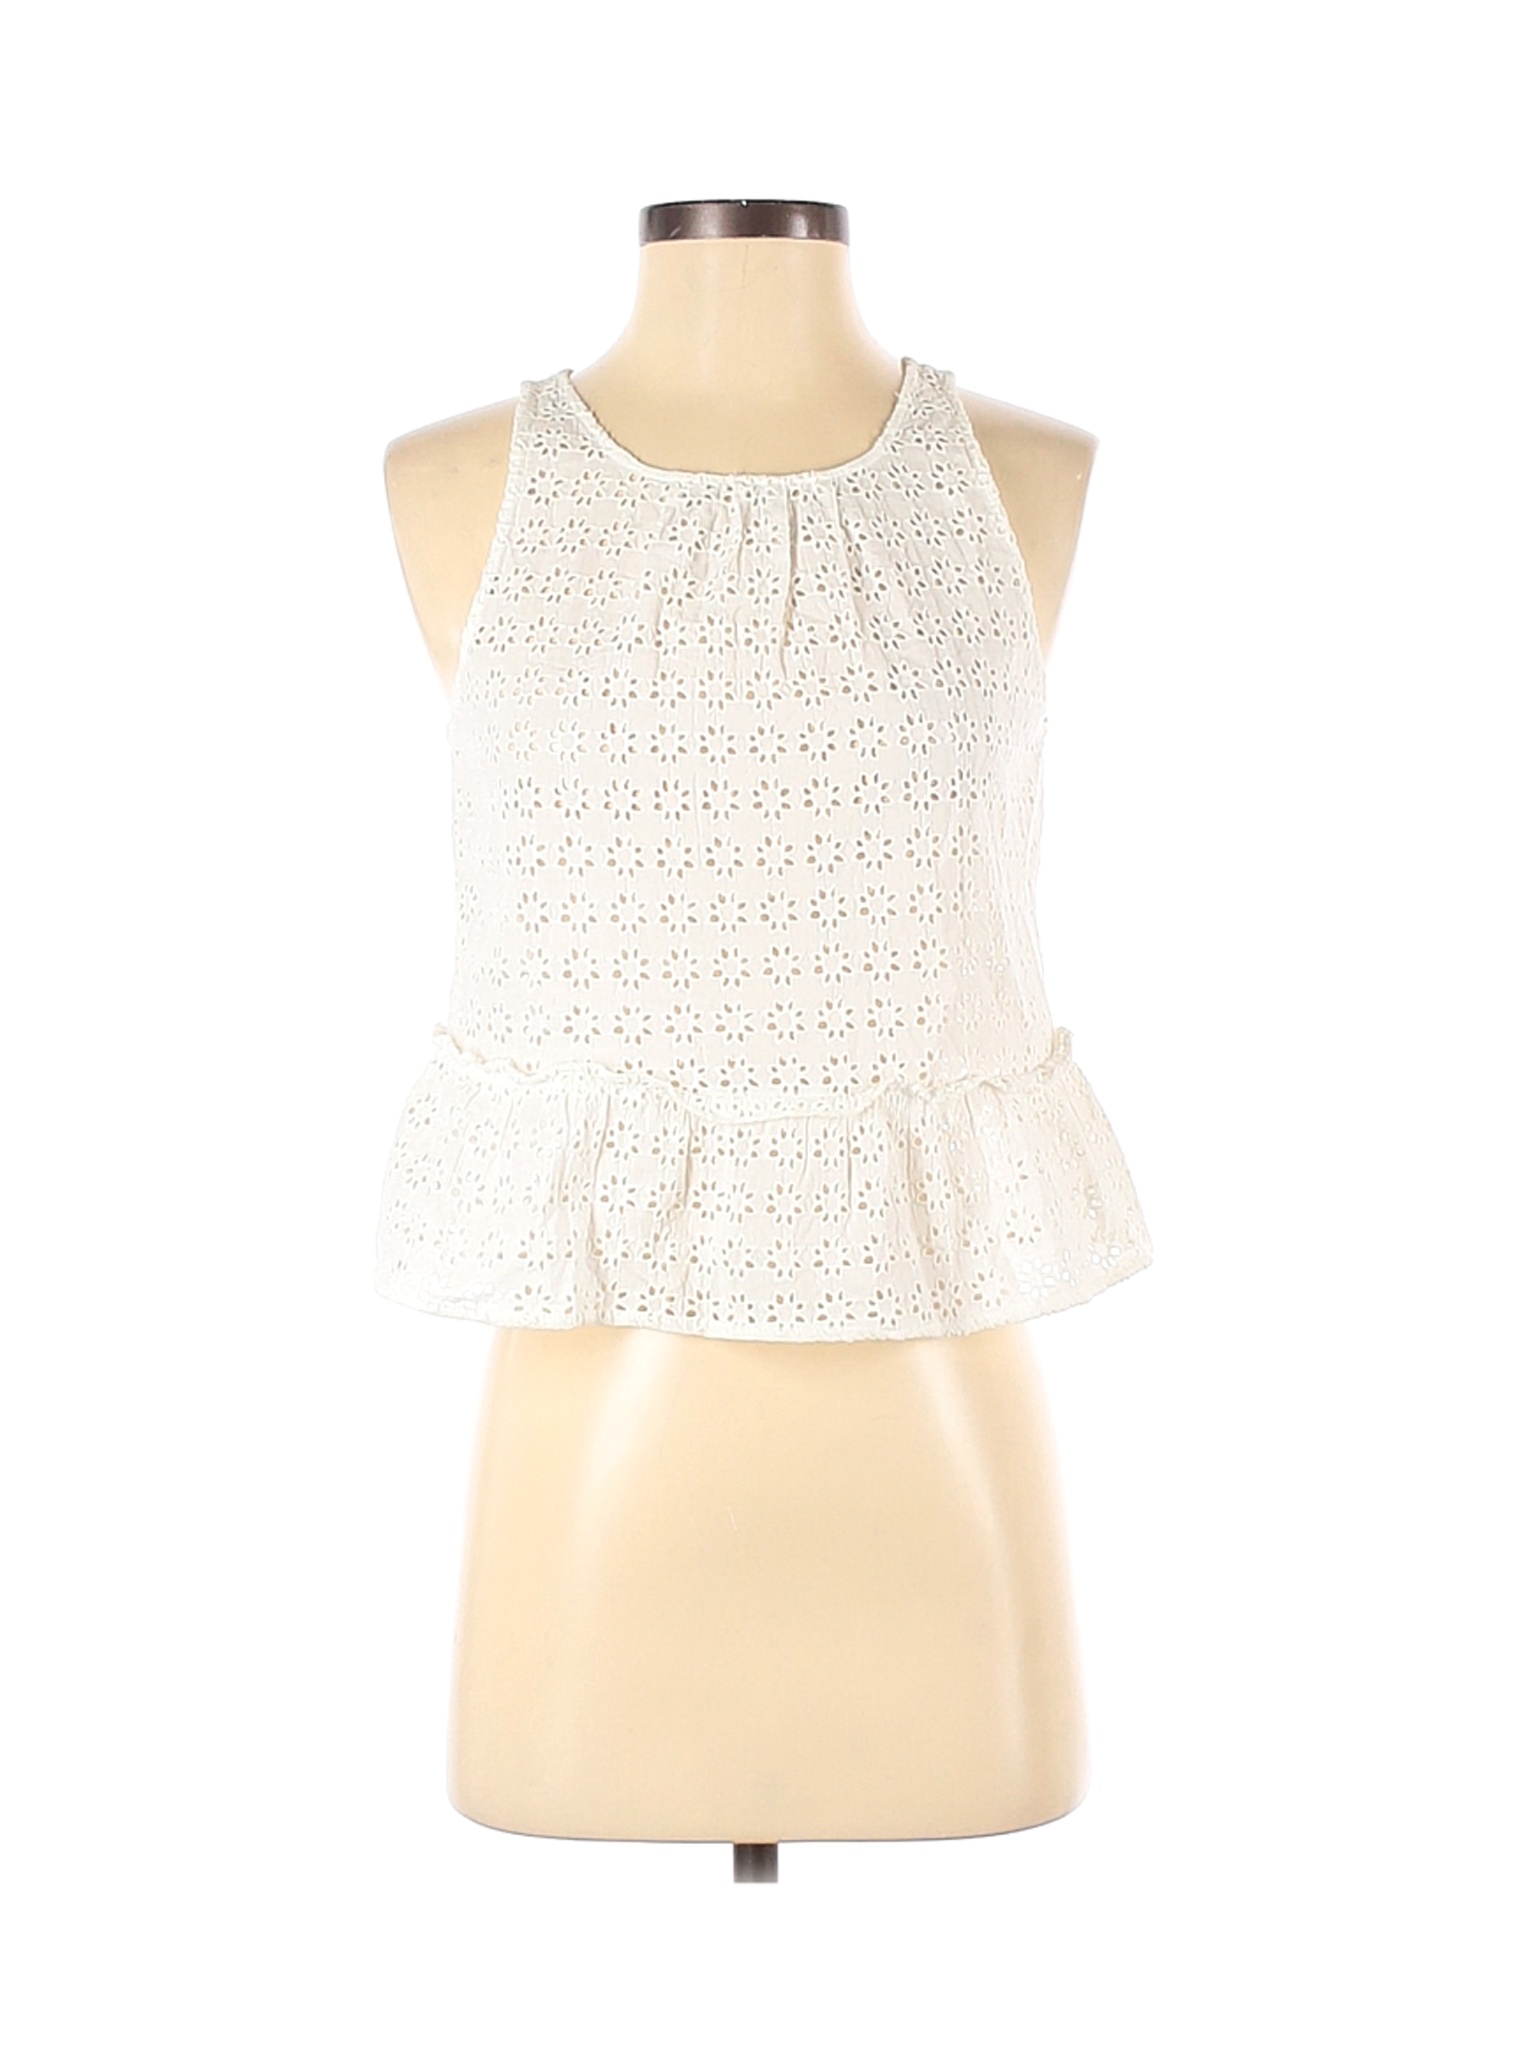 Zara Collection Women White Sleeveless Top XS | eBay